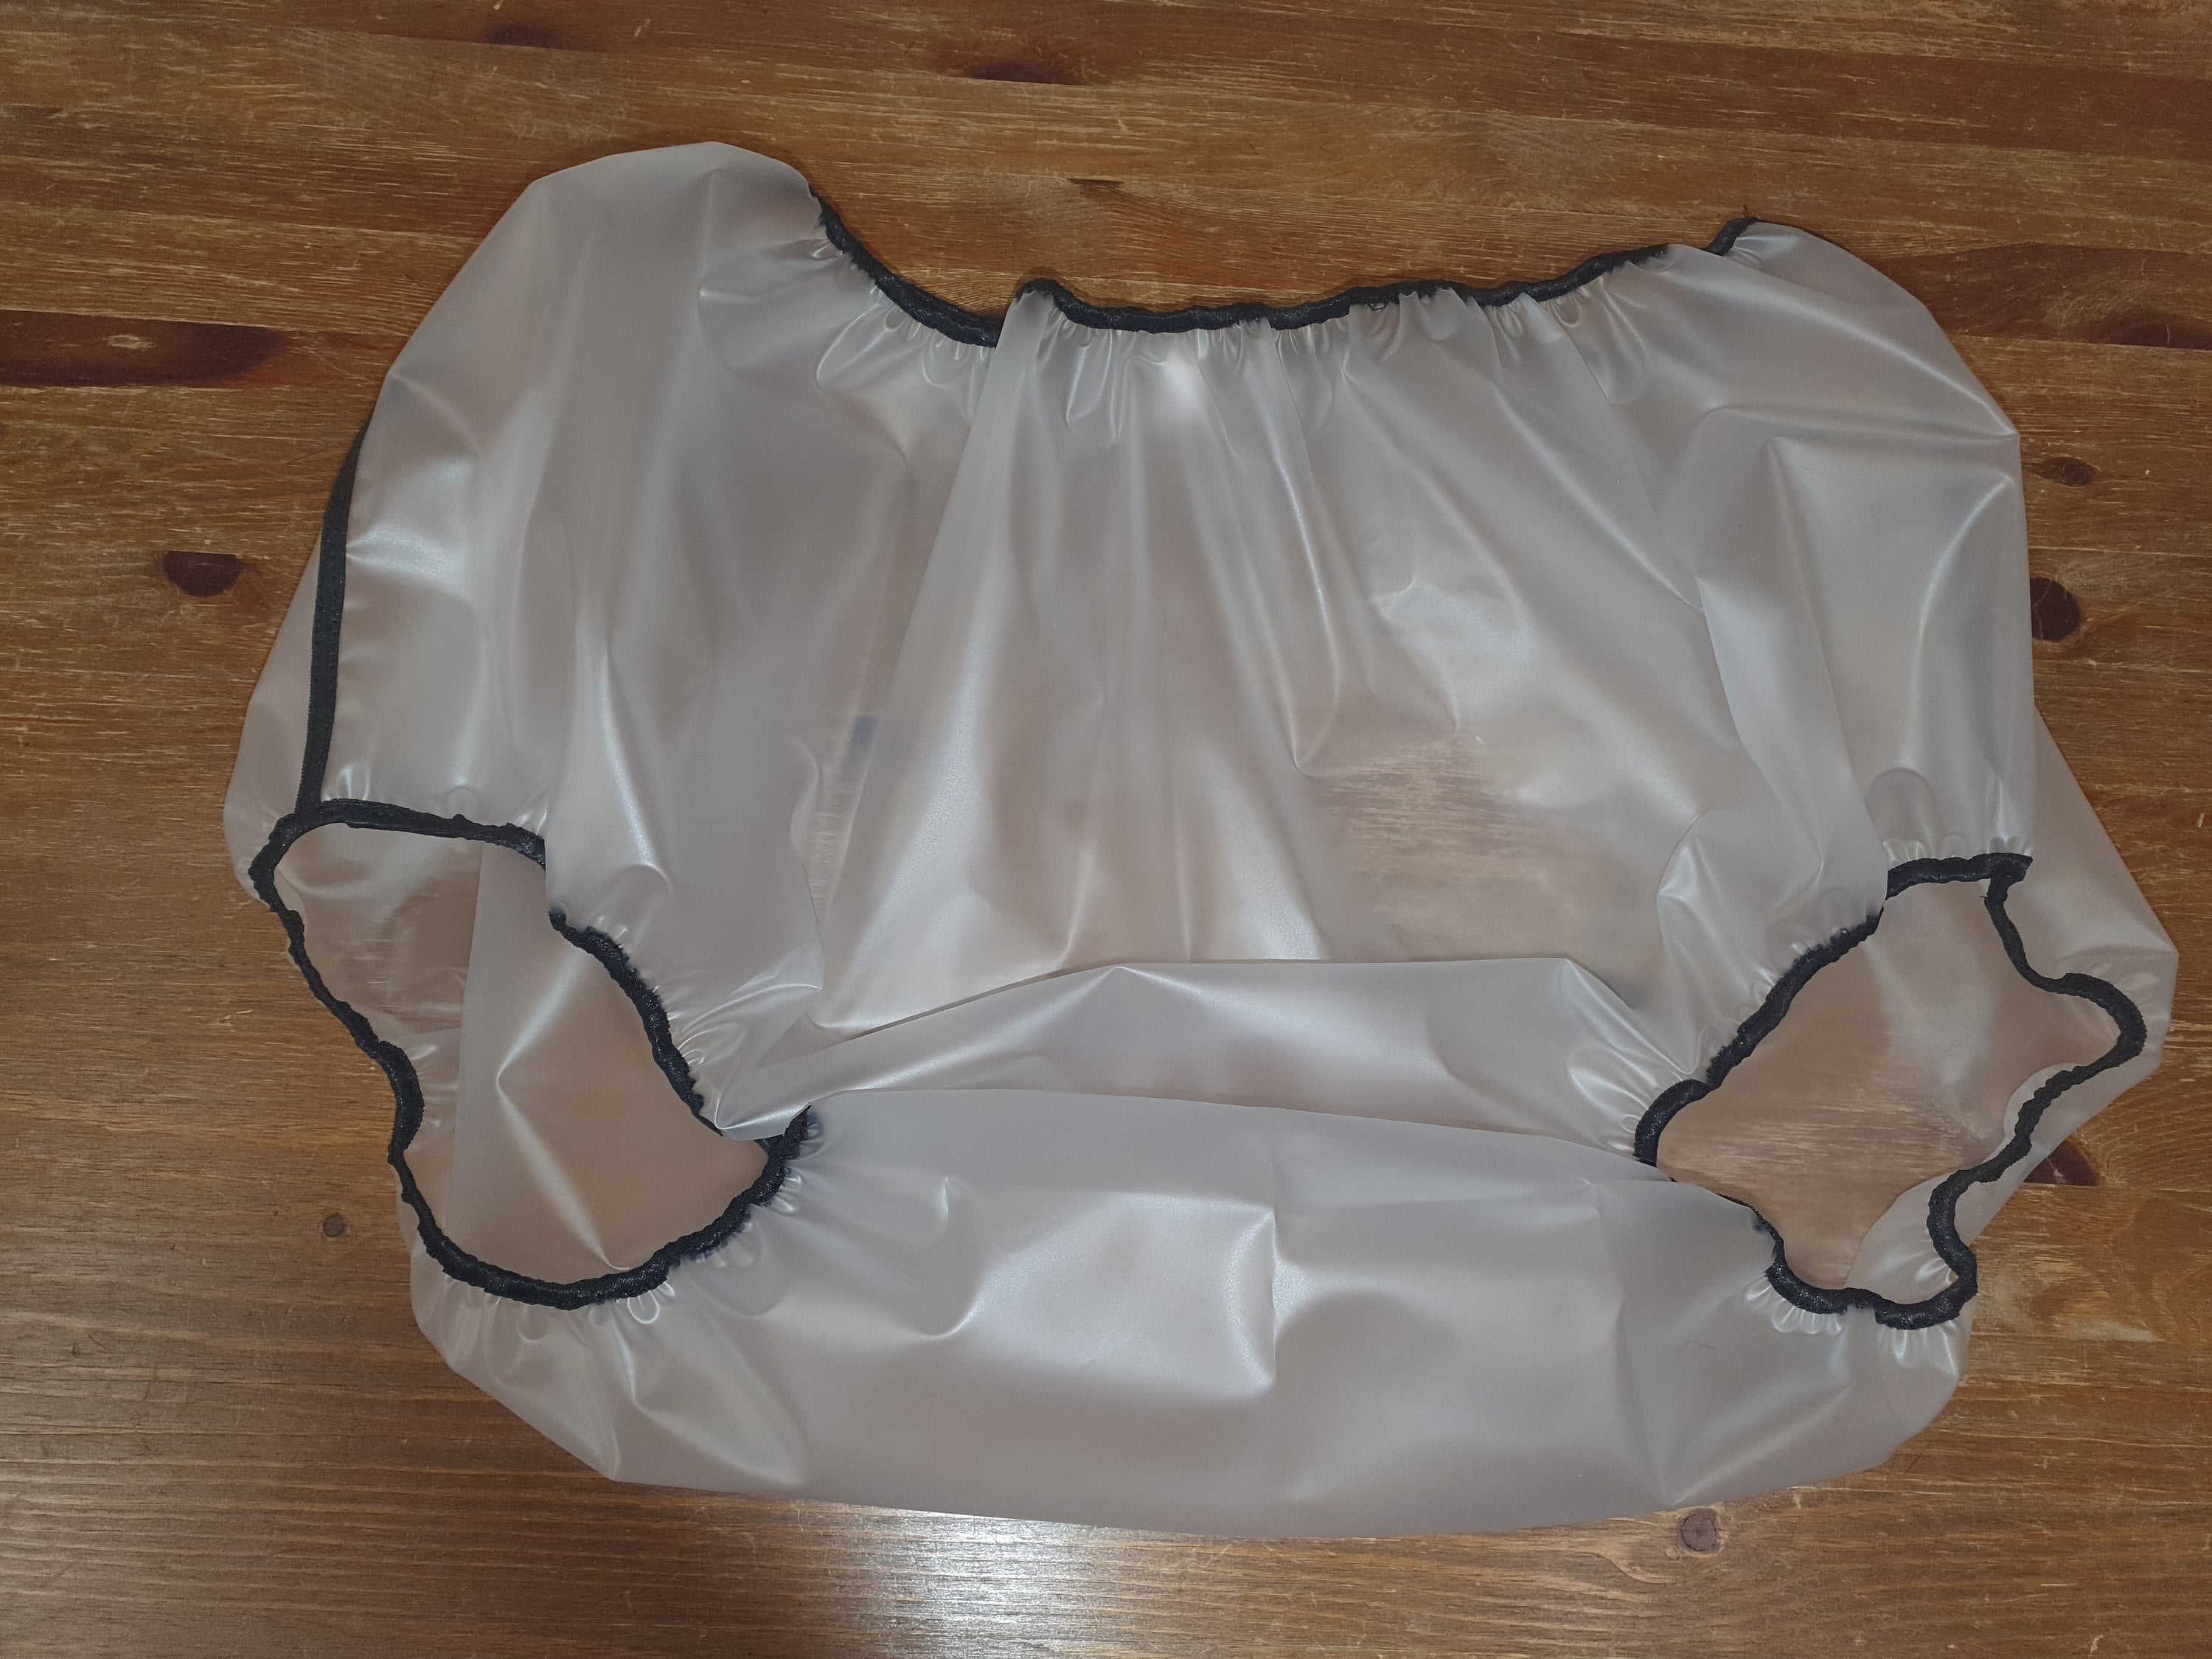 3PK Reliamed Adult Waterproof Soft Vinyl Plastic Pant Diaper Incontinent  SXXL  eBay